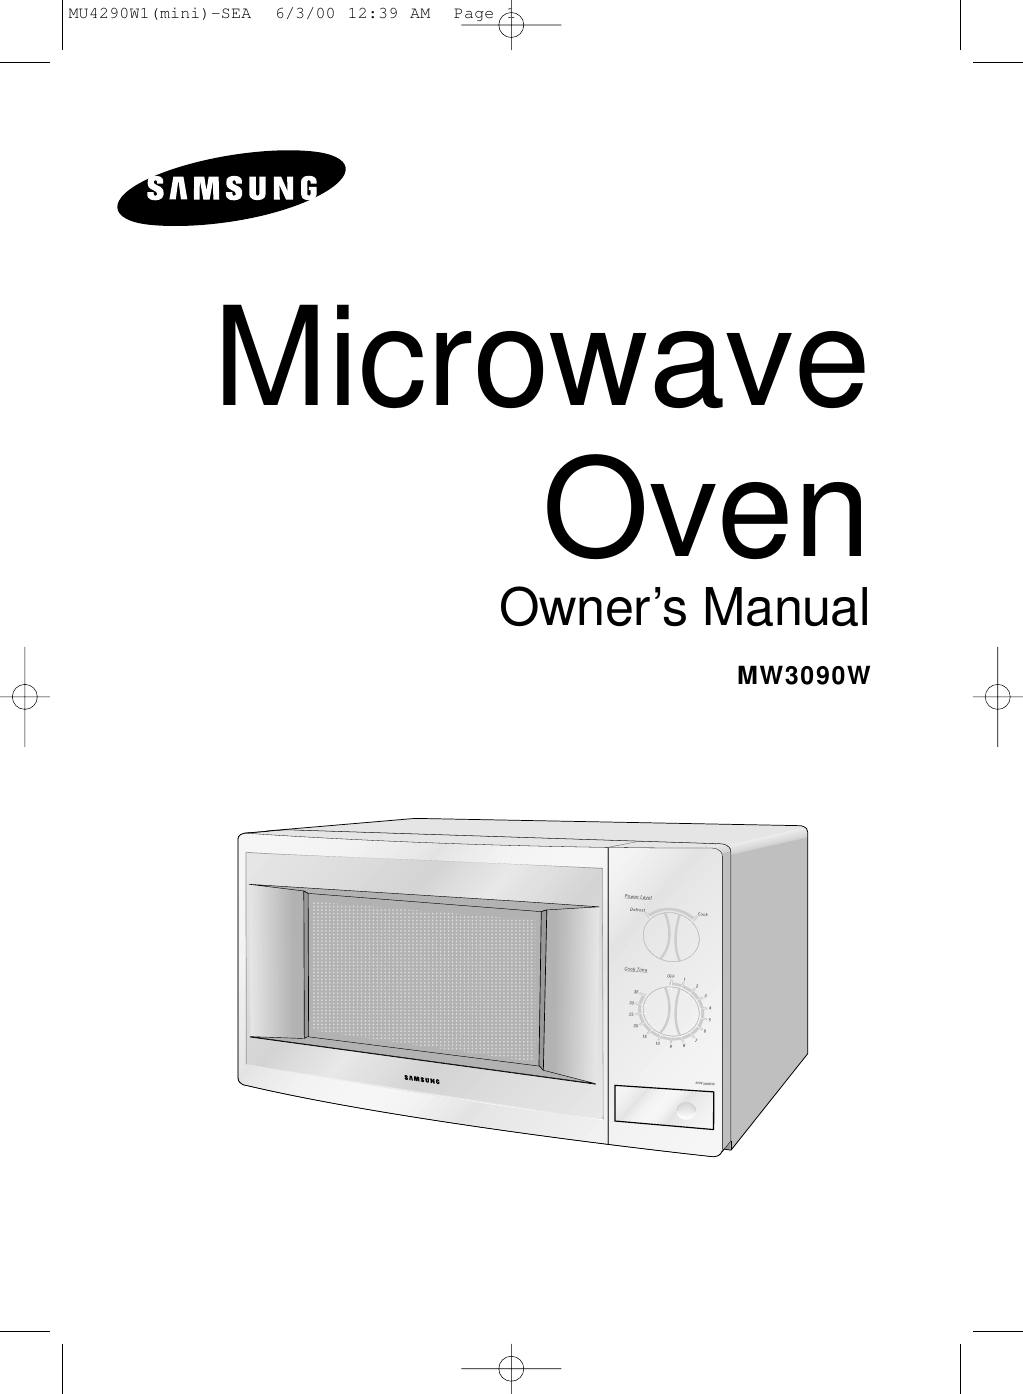 Microwave OvenOwner’s ManualMW3090WMW3090WMU4290W1(mini)-SEA  6/3/00 12:39 AM  Page 1